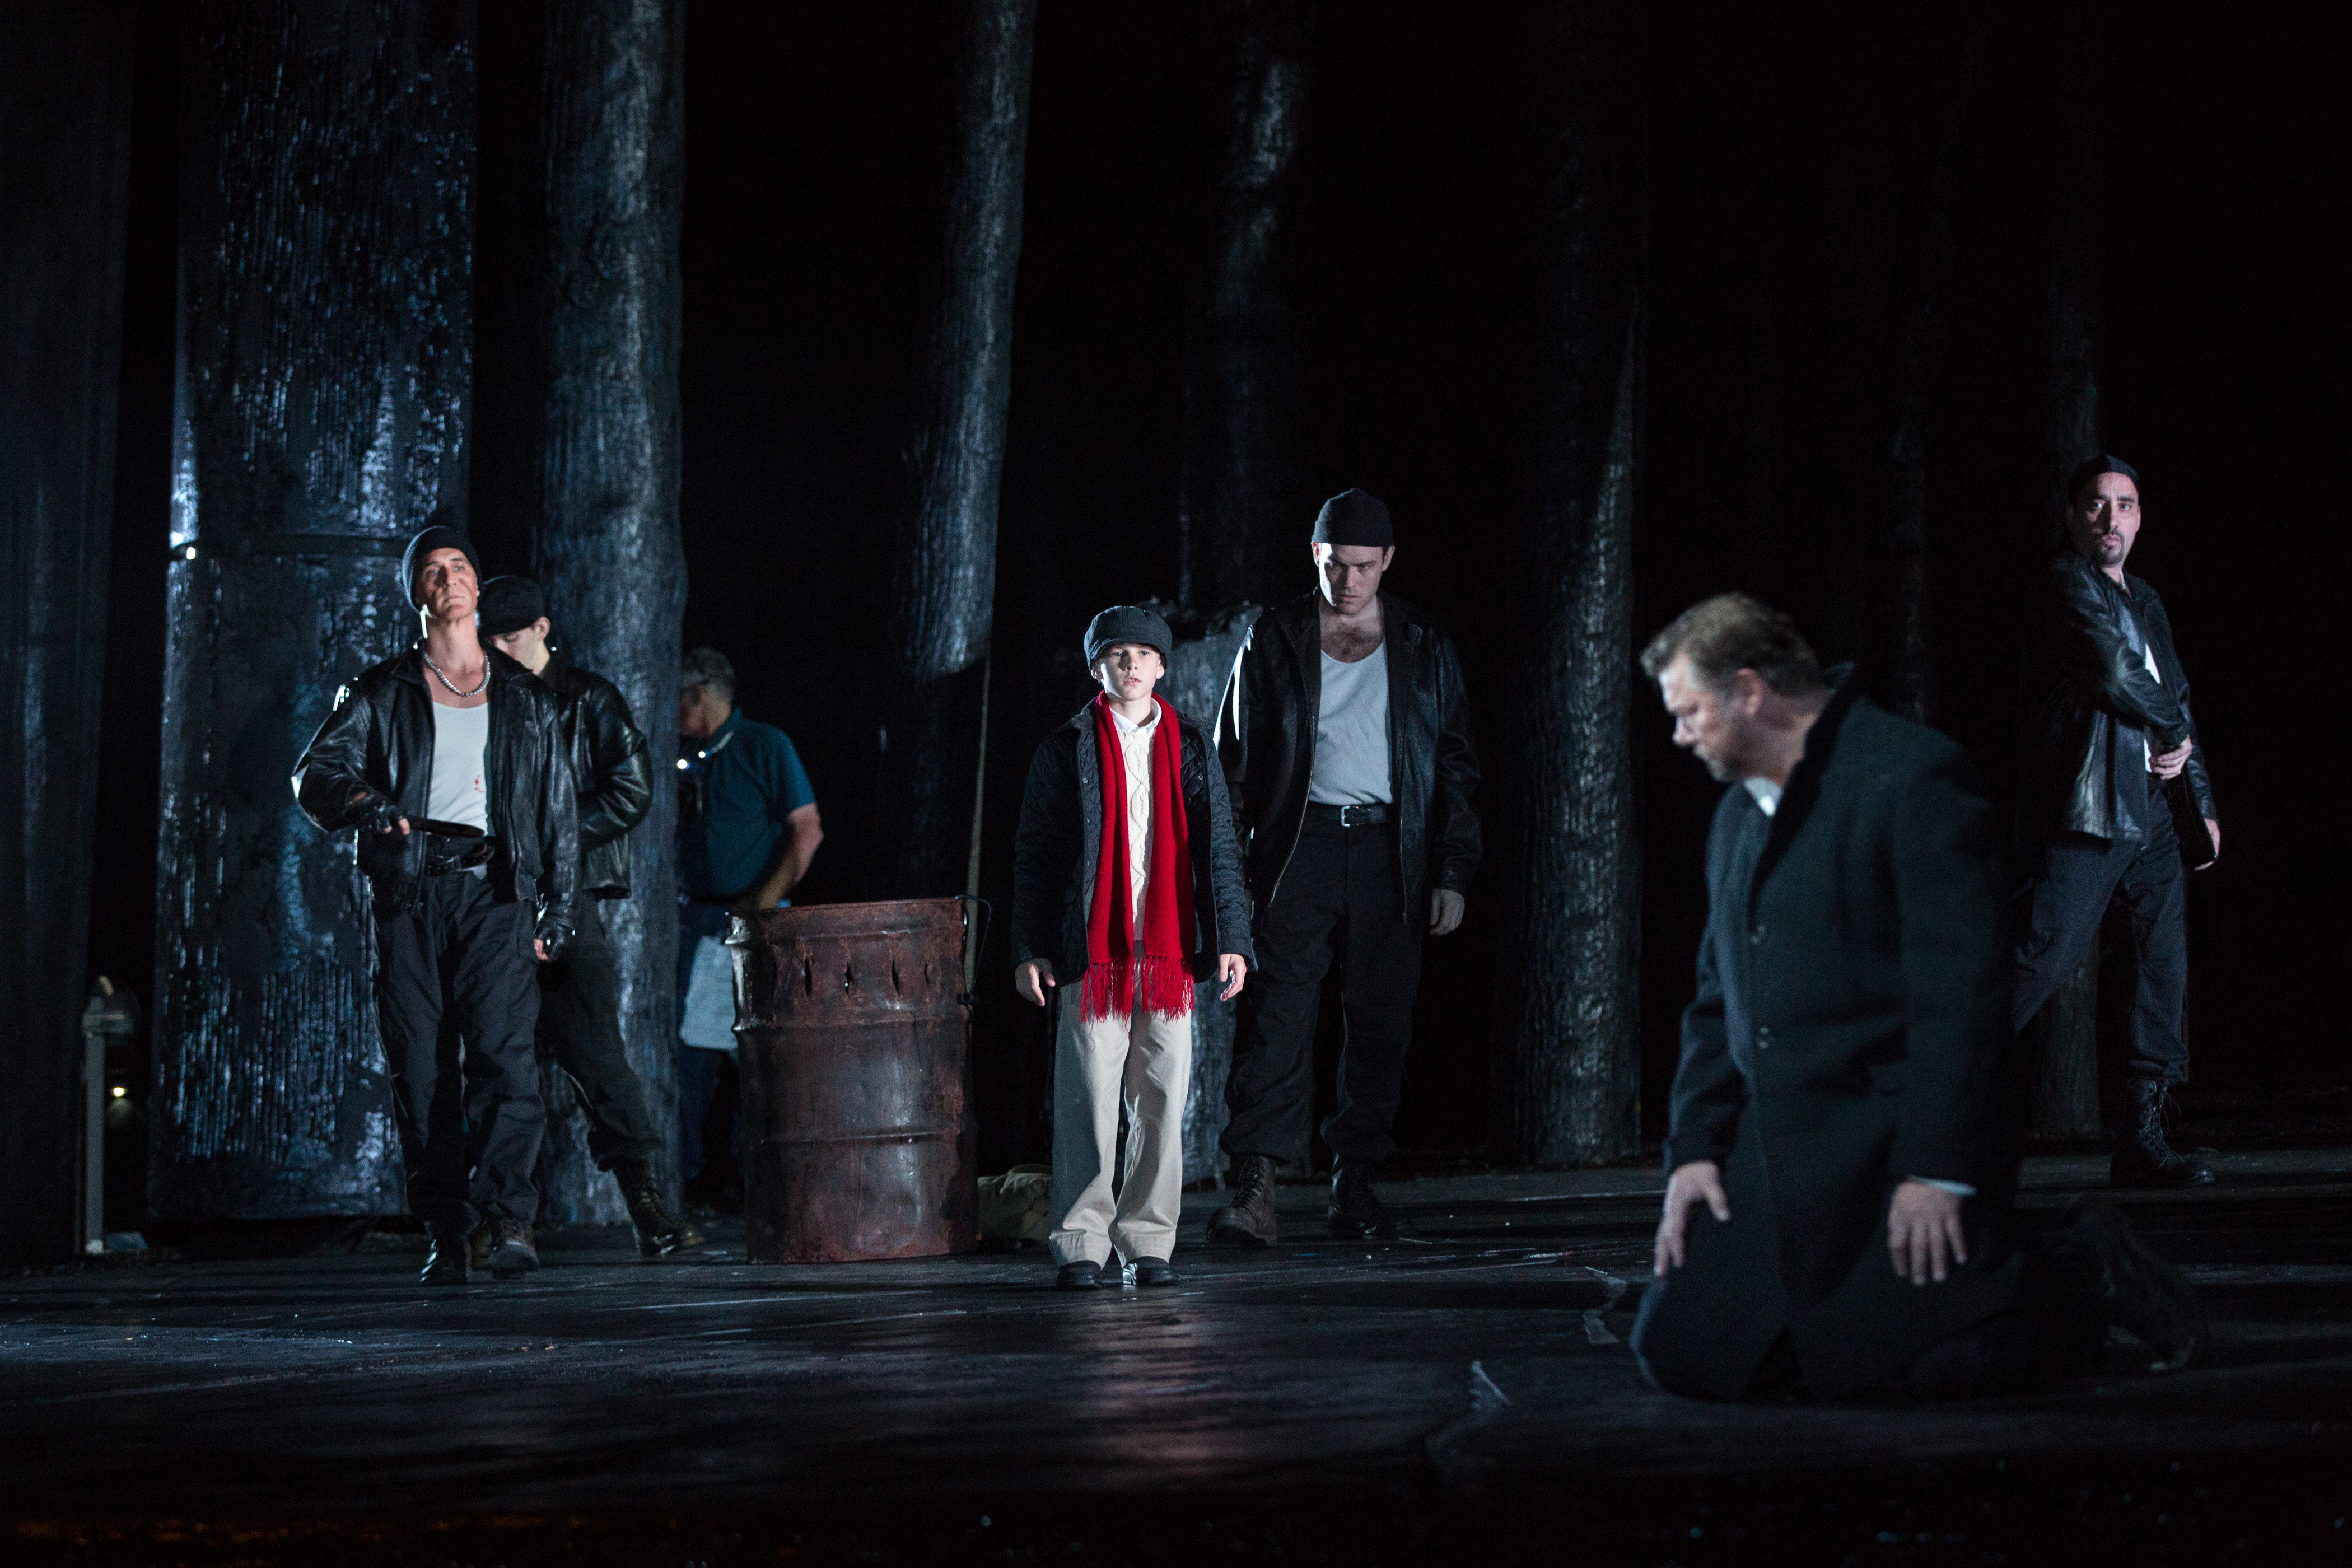 Metropolitan Opera's 2014 production of Verdi's Macbeth, featured role Fleance, son of Banquo